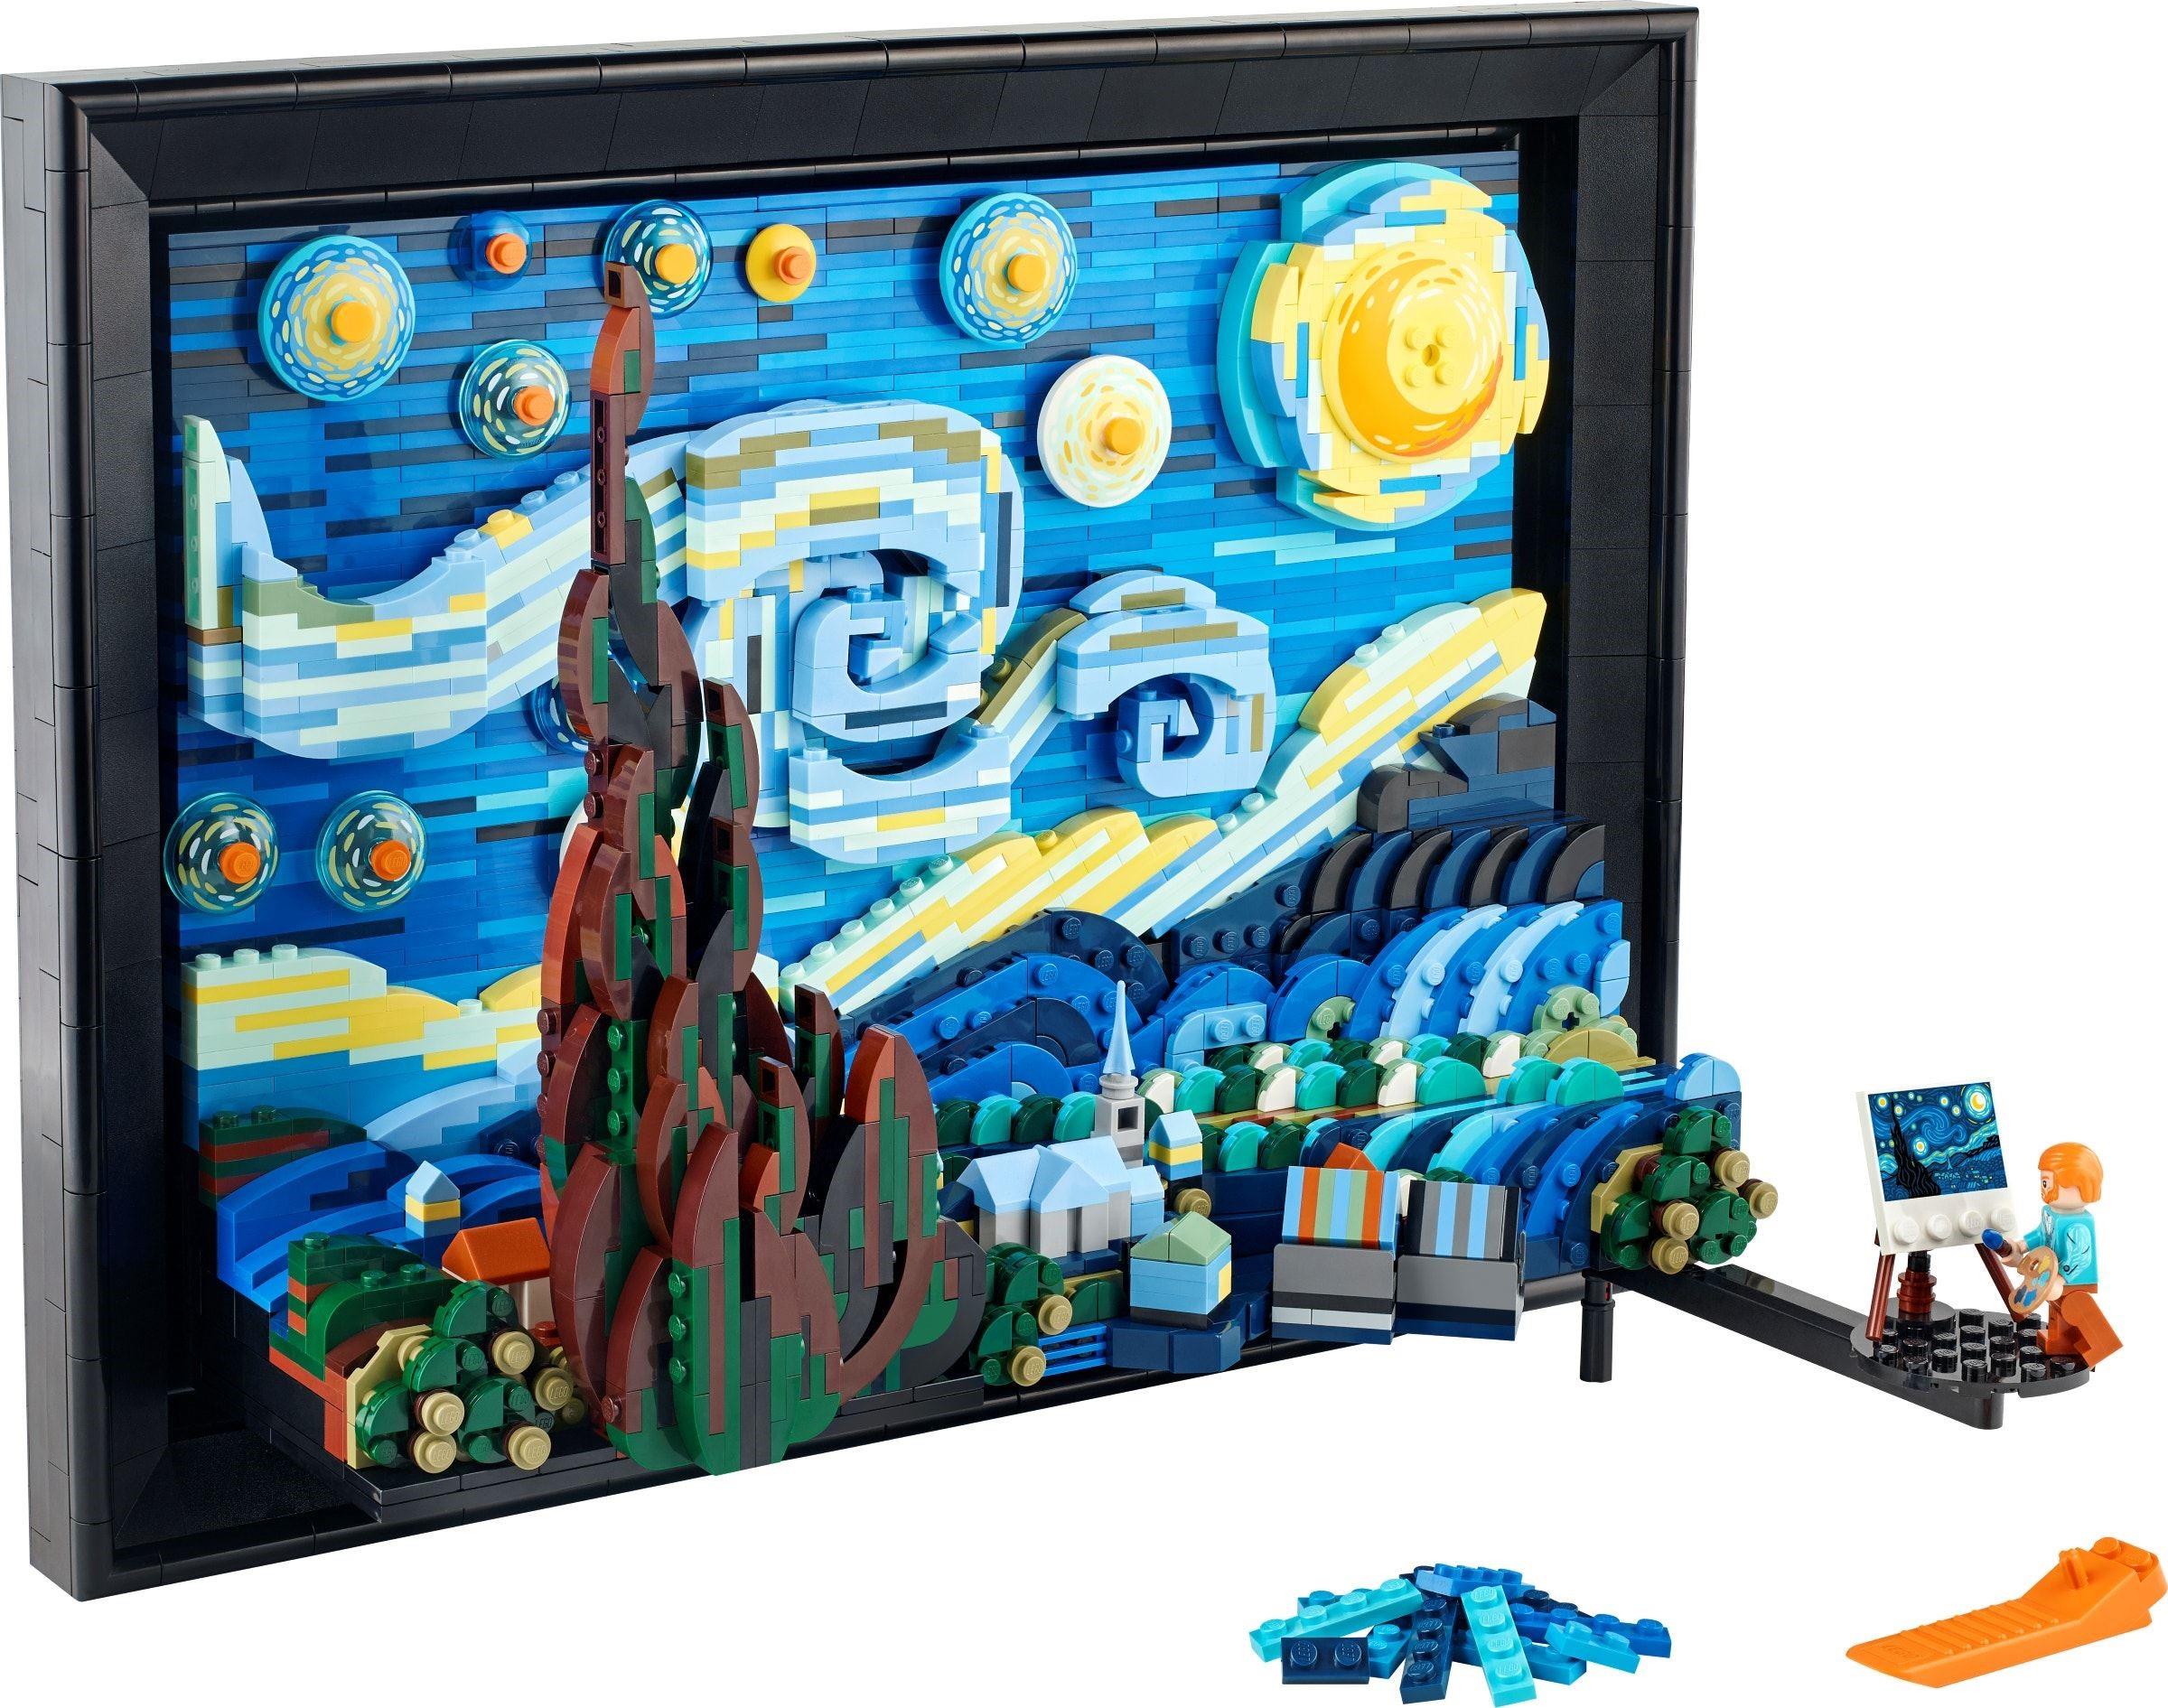 idea106 Lego Ideas (CUUSOO) 21333 - Vincent van Gogh Minifigure with Parts  - New